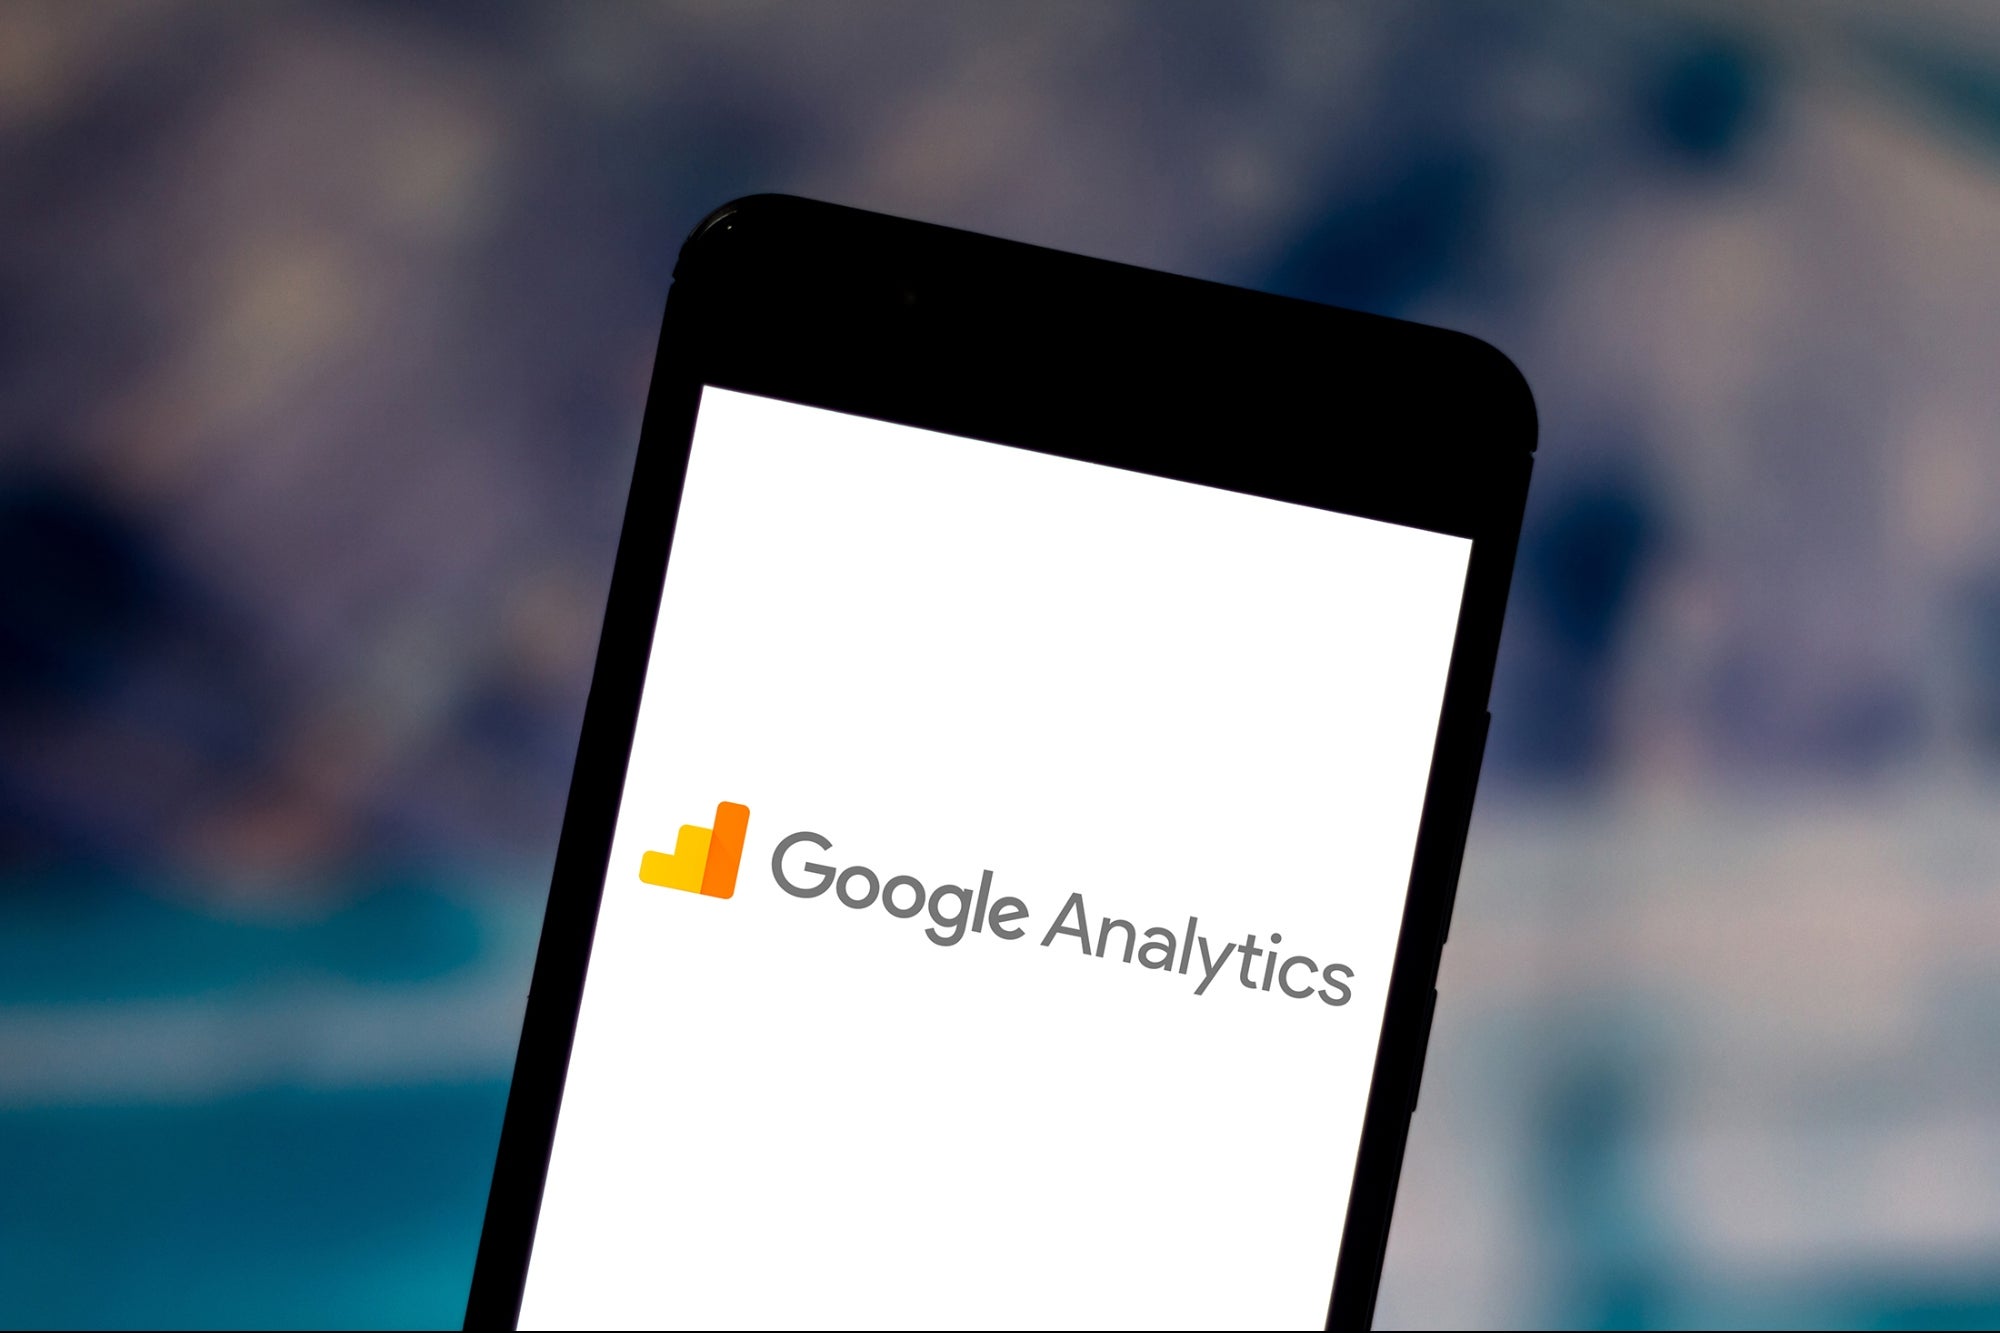 Google Analytics logo on a phone